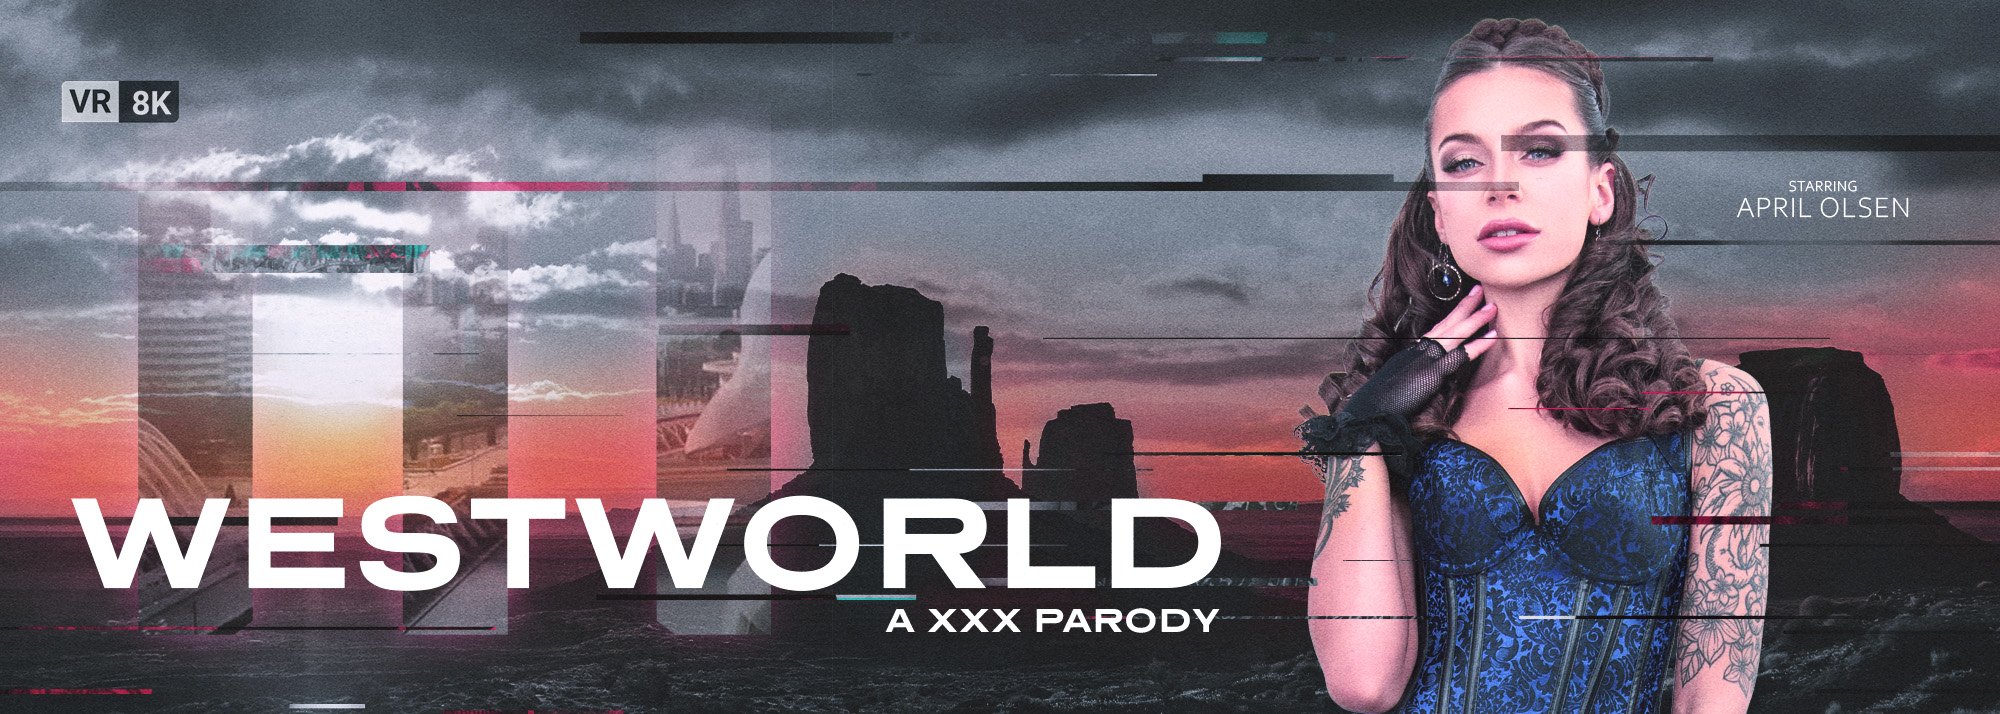 Westworld (A XXX Parody) - VR Porn Video, Starring April Olsen VR